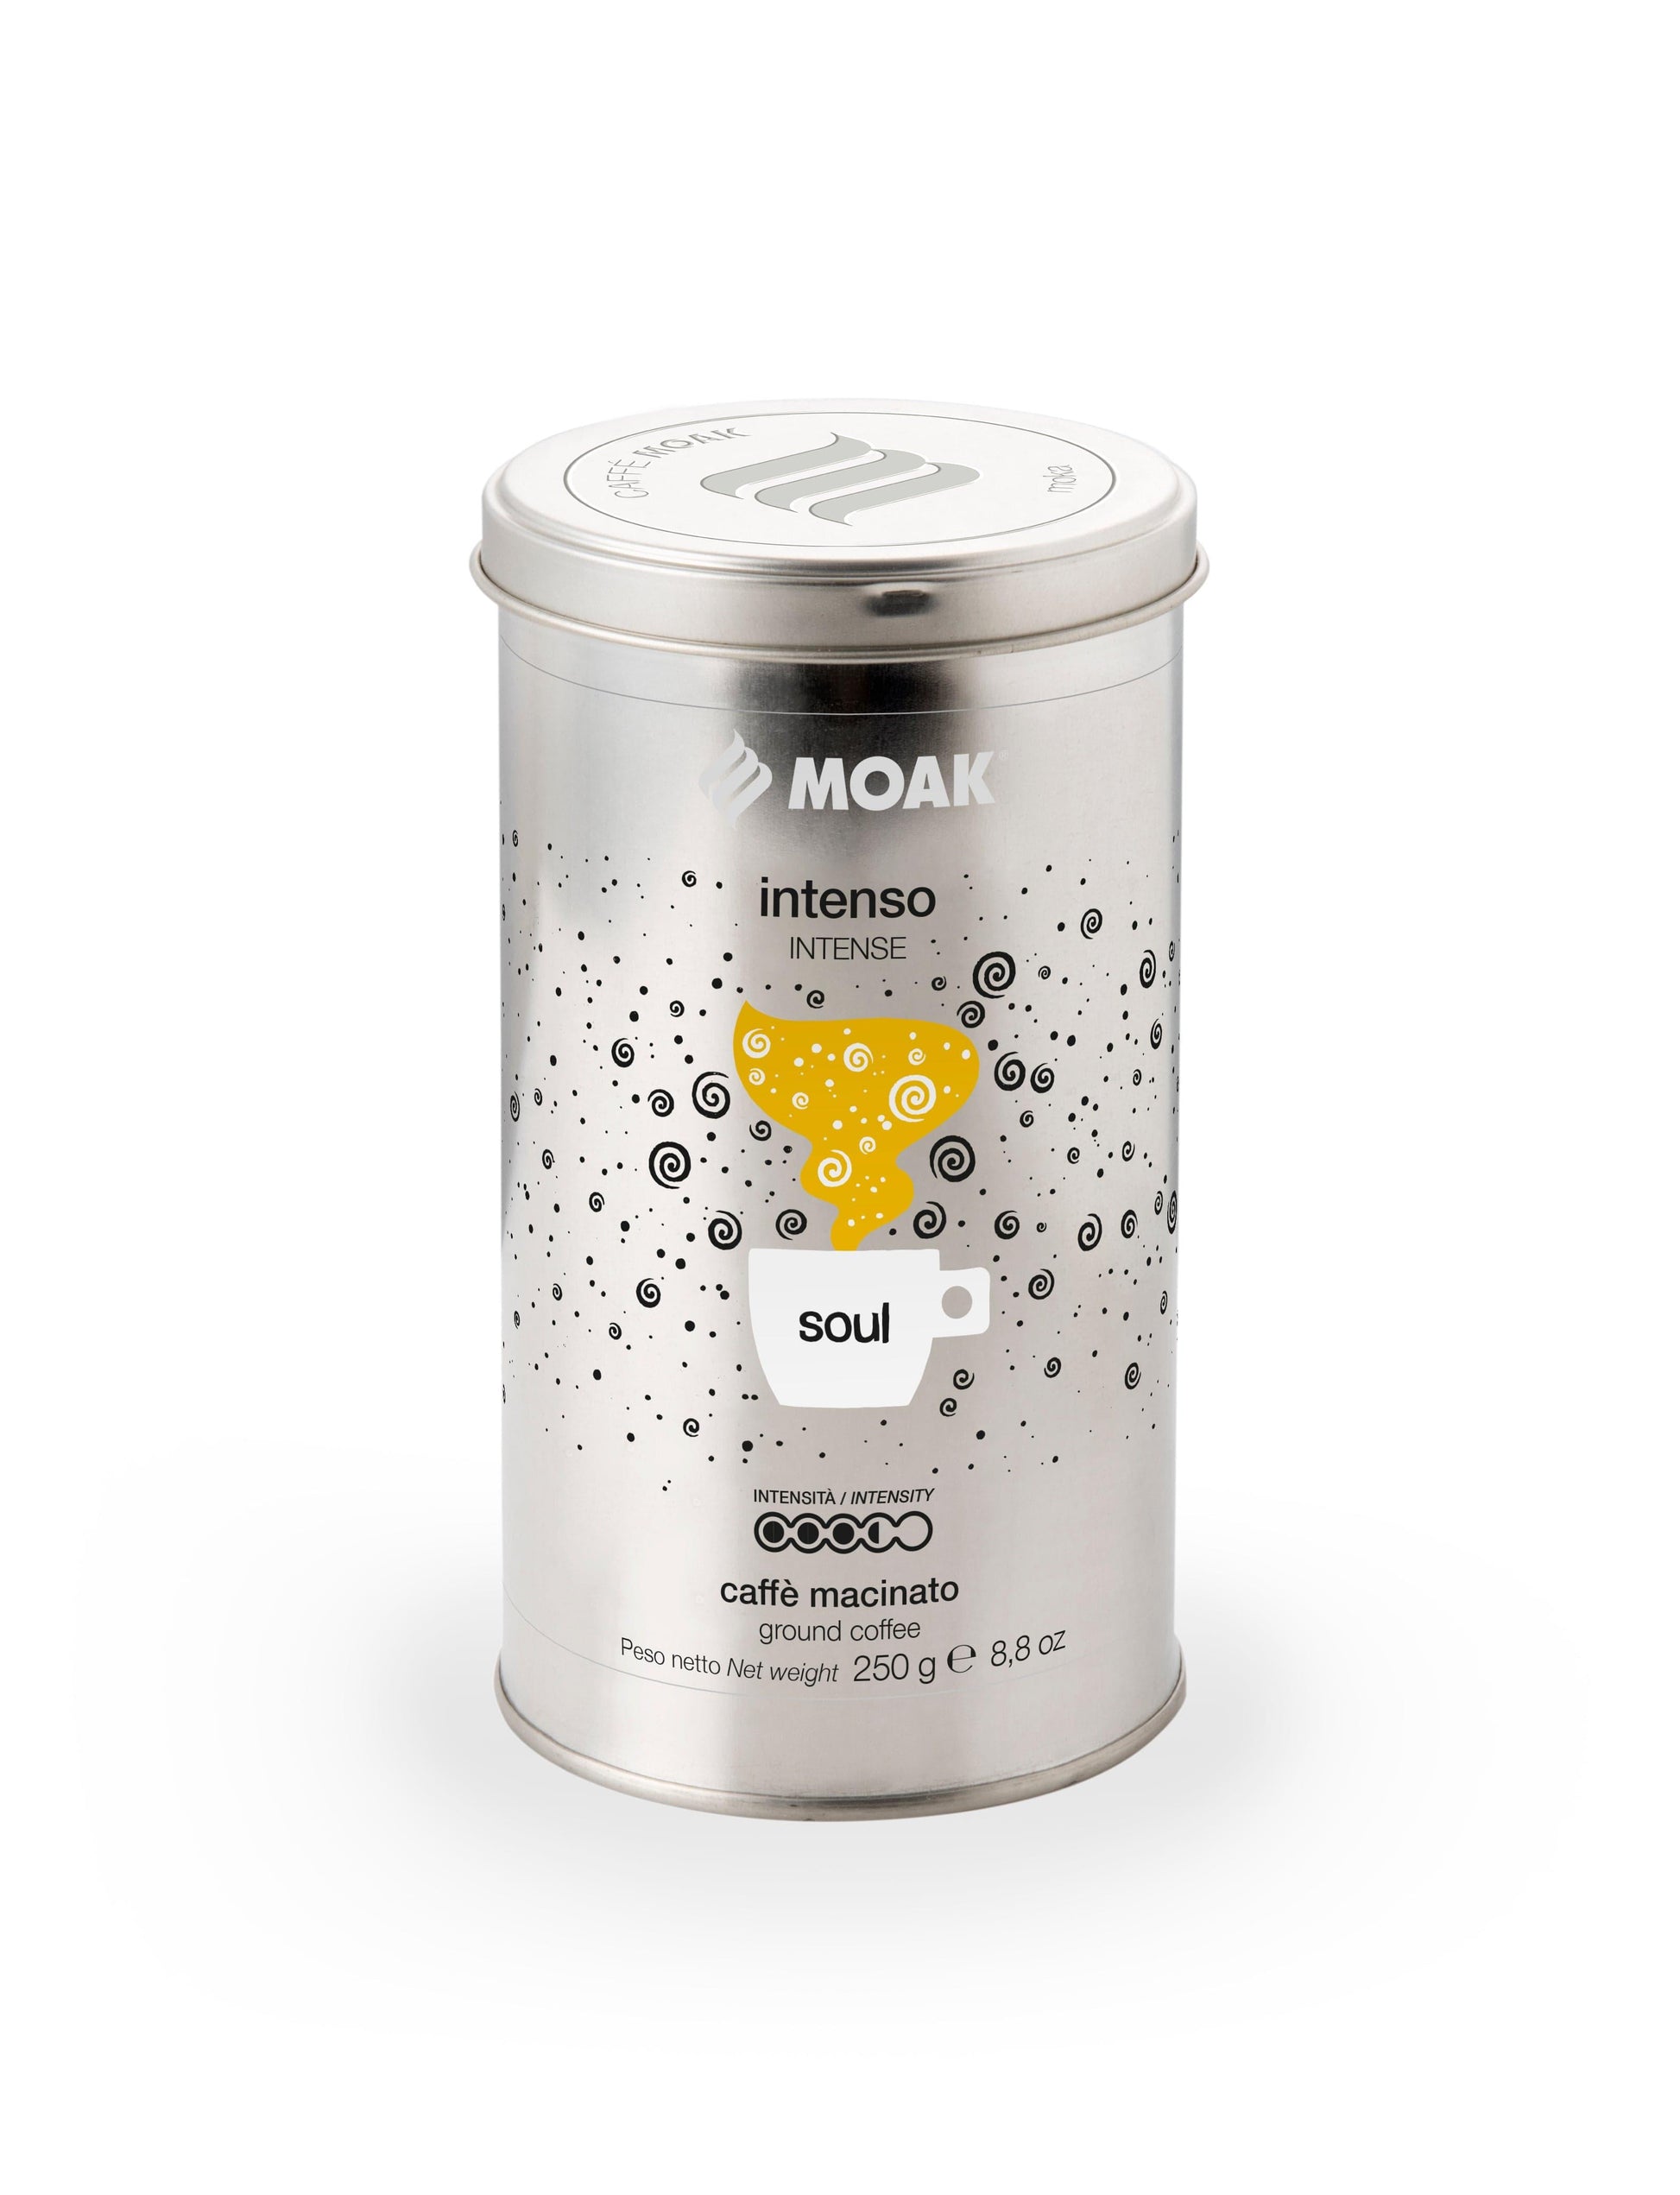 Moak 'Intenso Soul' Latta Ground Coffee 250g - Moak International Distributors Malta